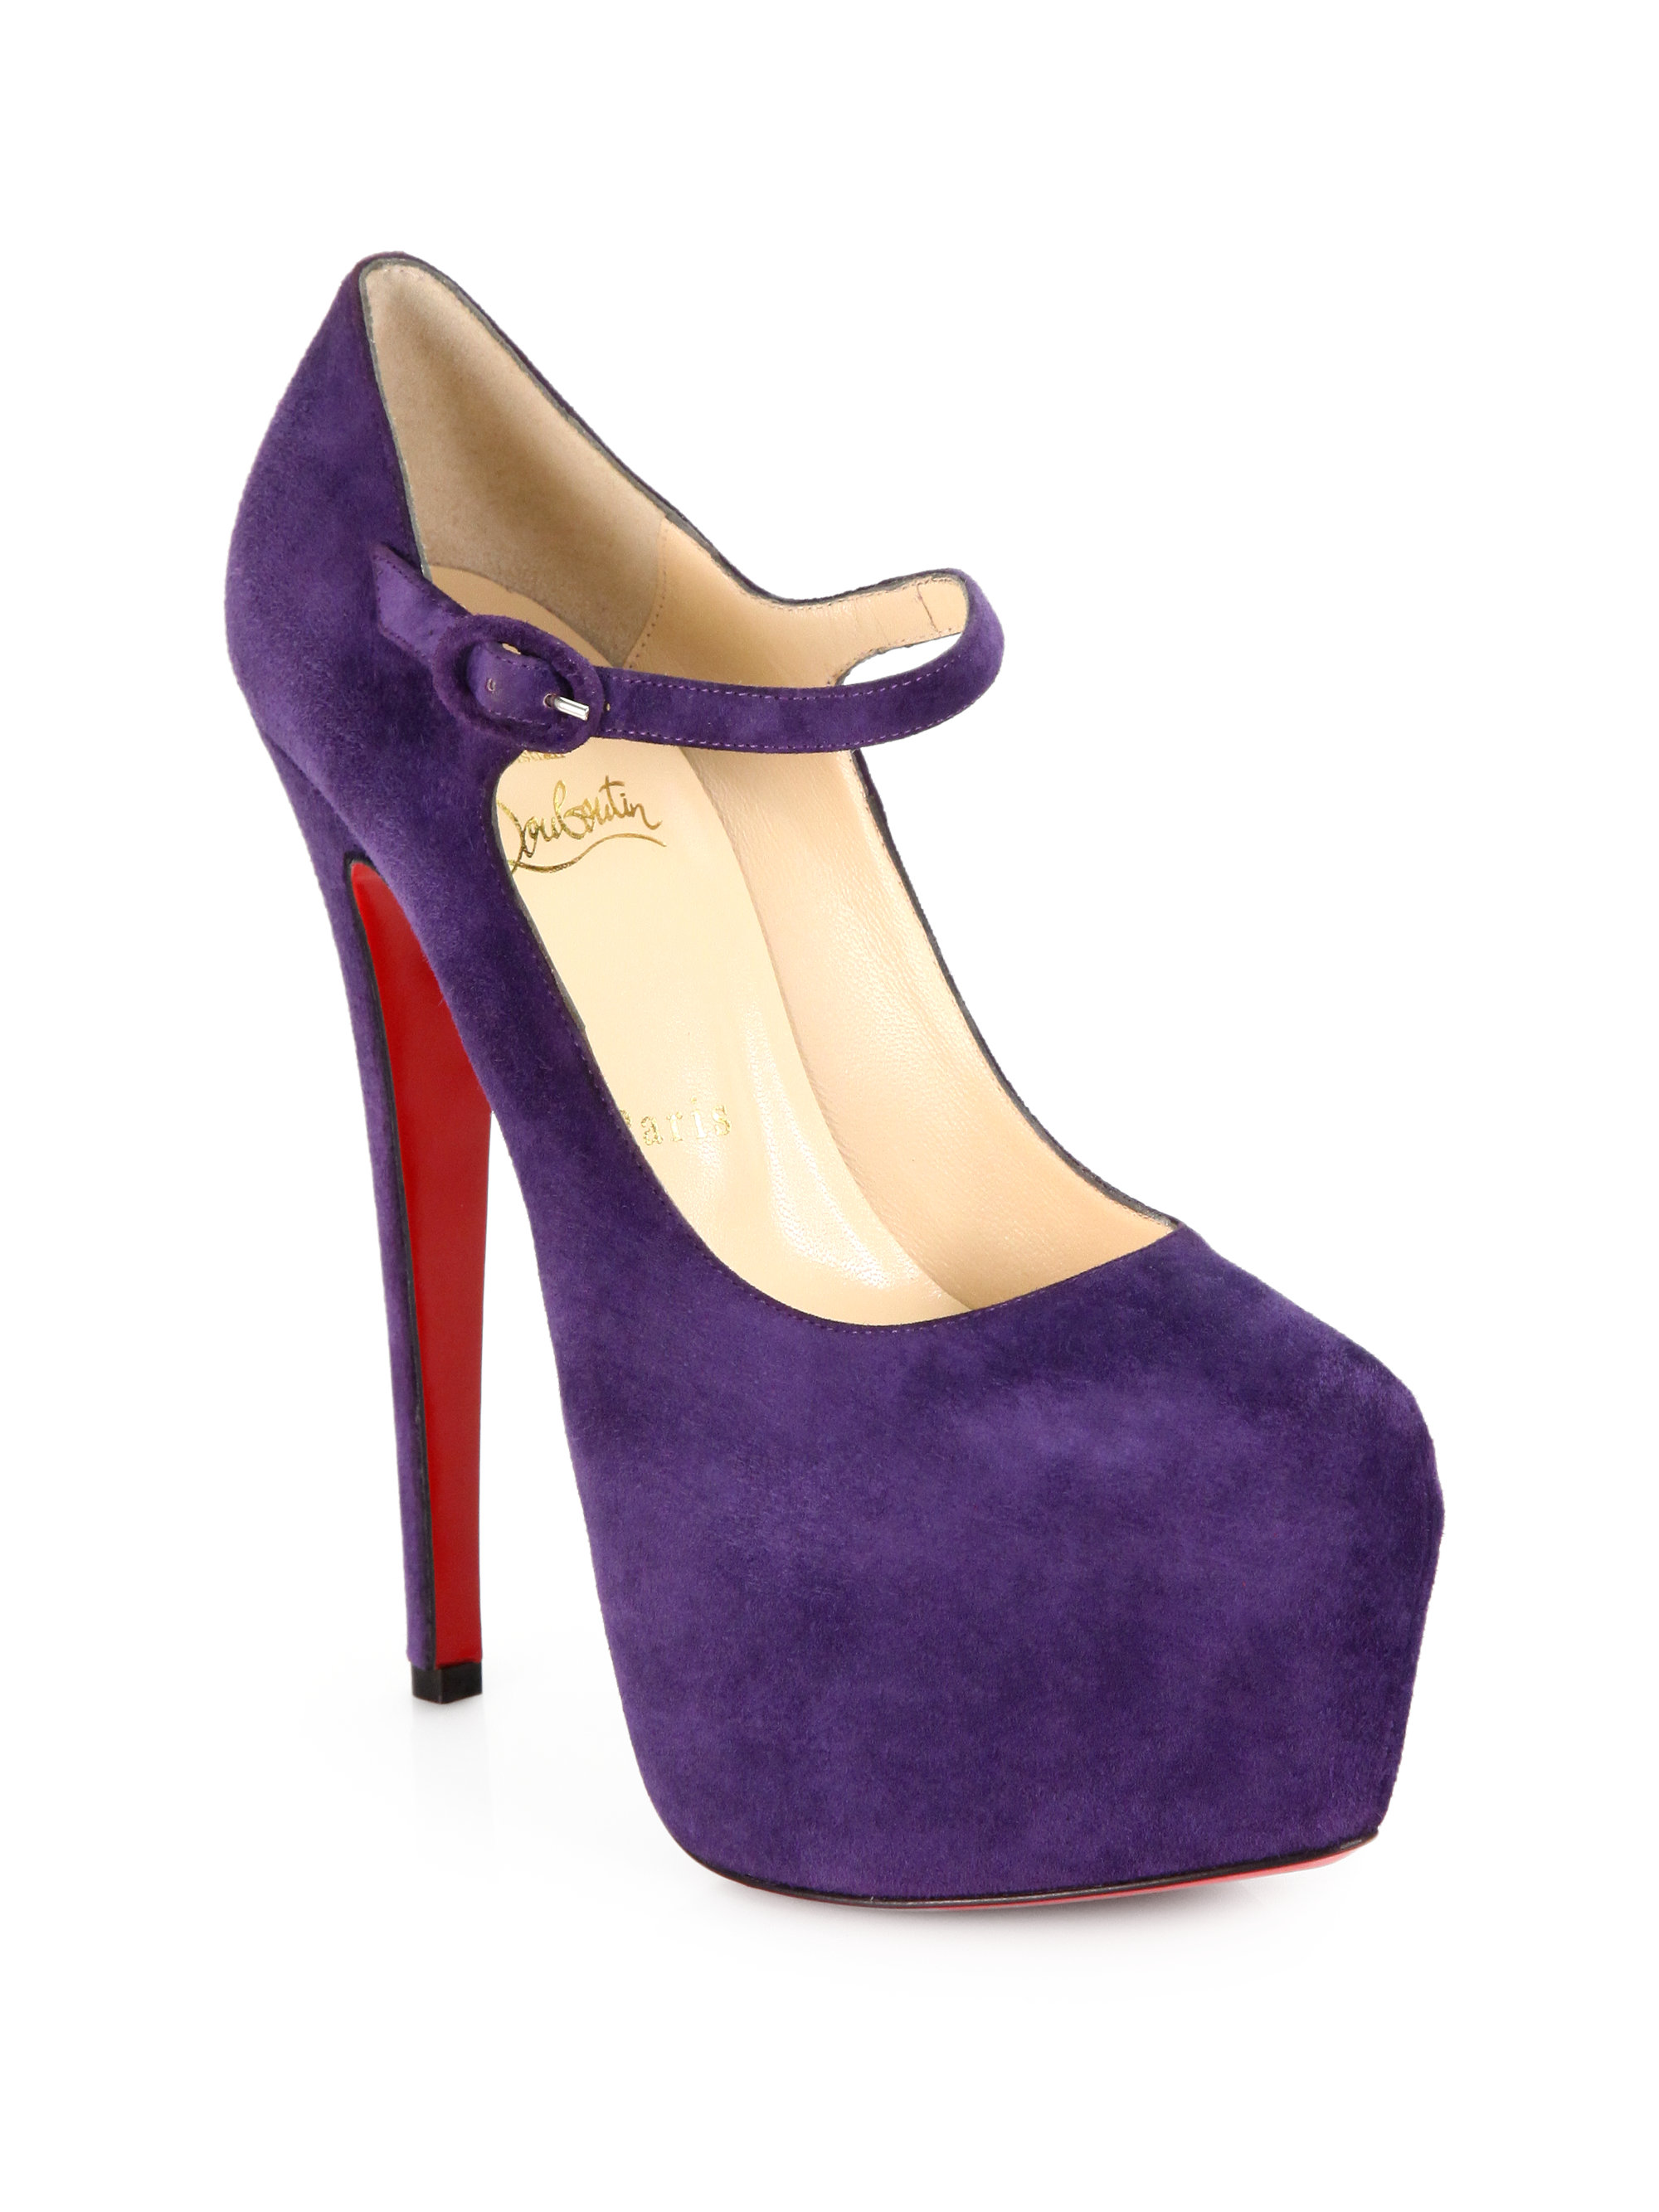 Artesur » christian louboutin Lady Daf Jane pumps Violet suede stiletto heels